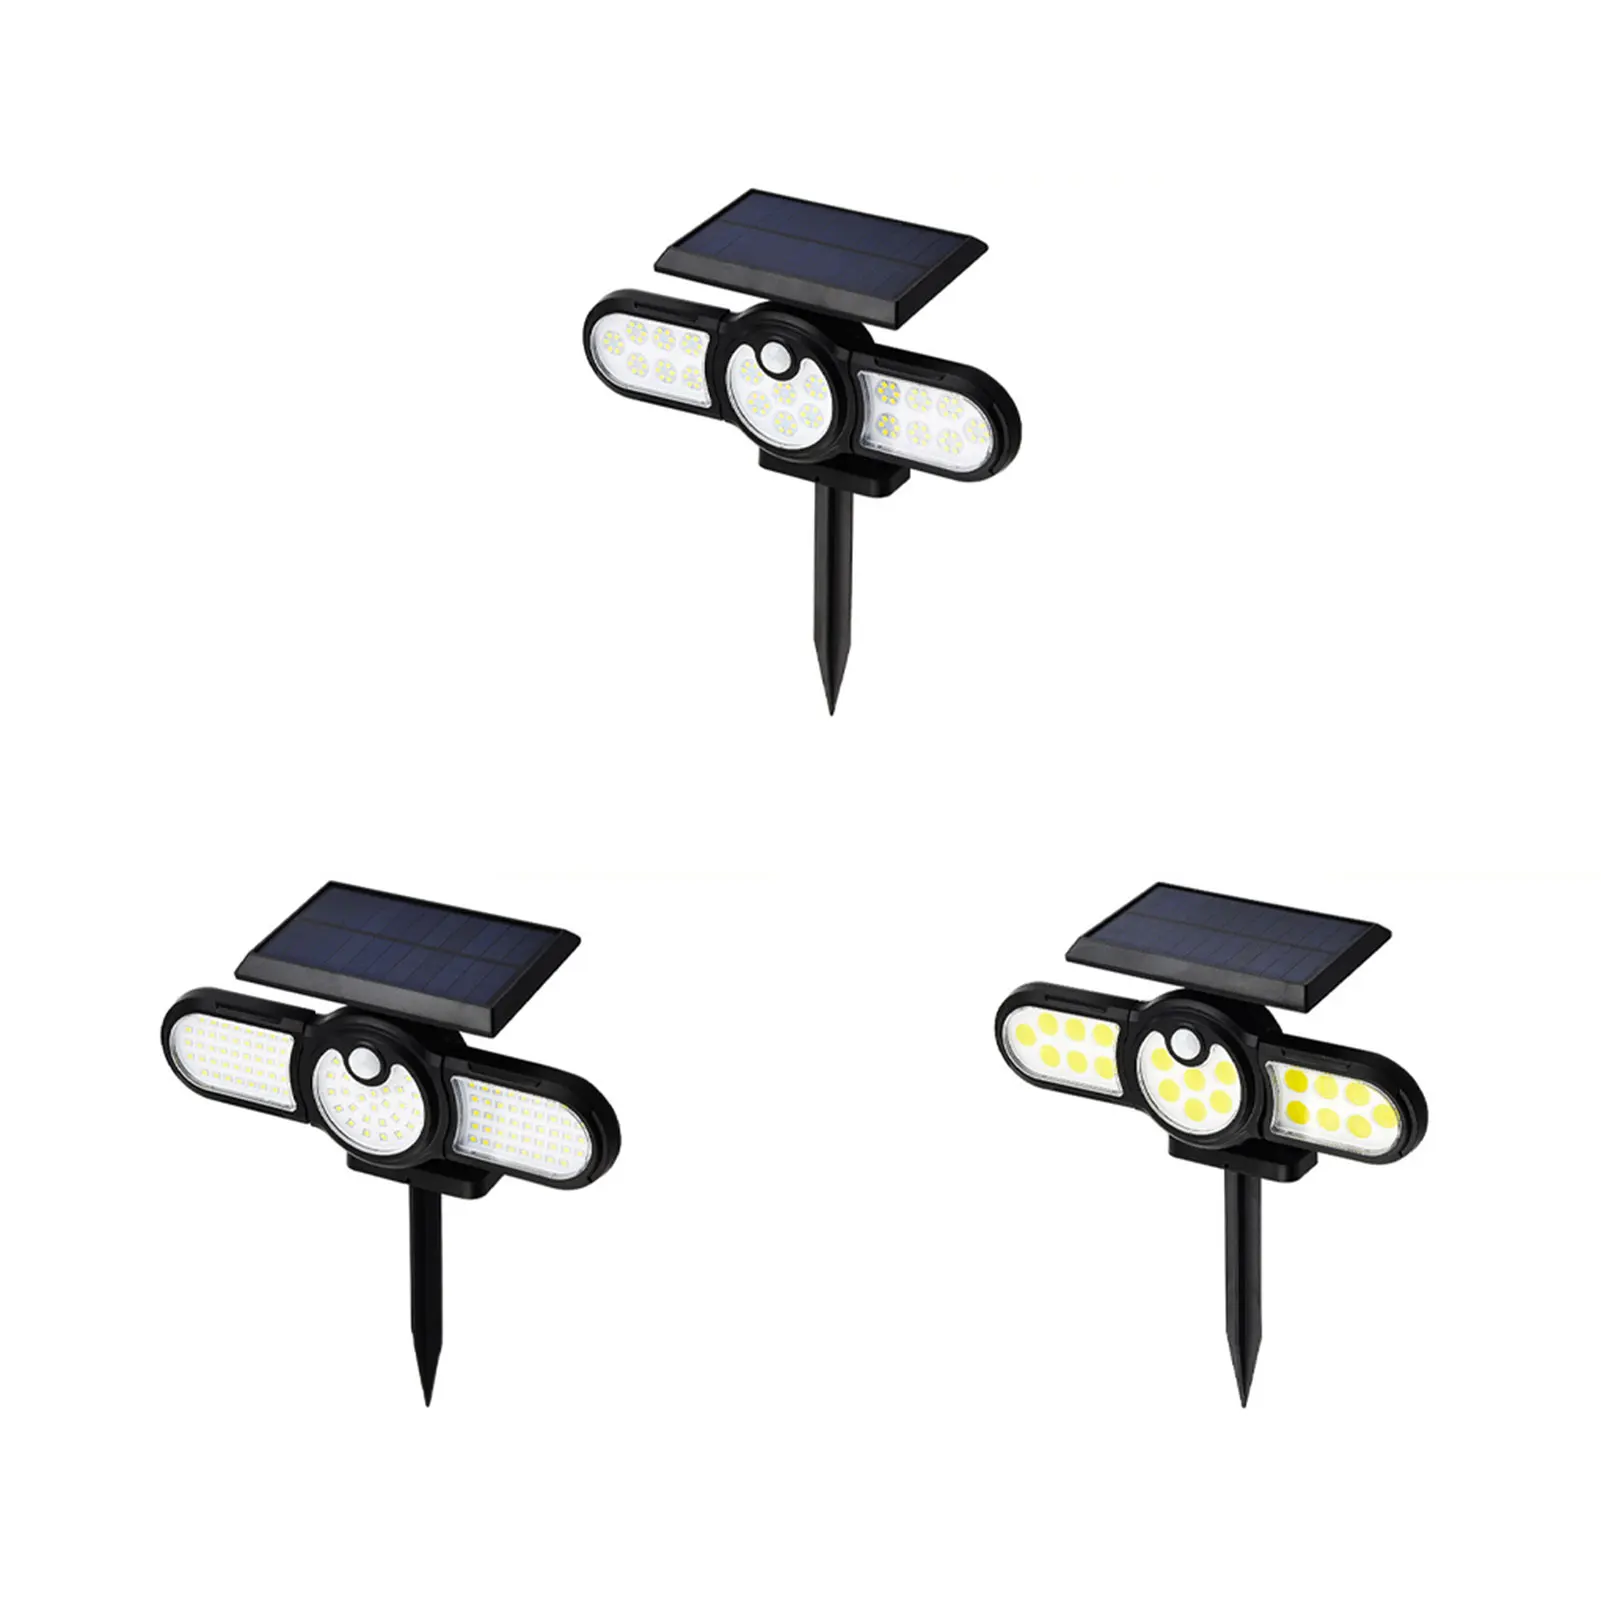 

LED Solar Security Light PIR Sensor Stake Lamp with 3 Adjustable Head for Courtyard Garden Patio Backyard TS1